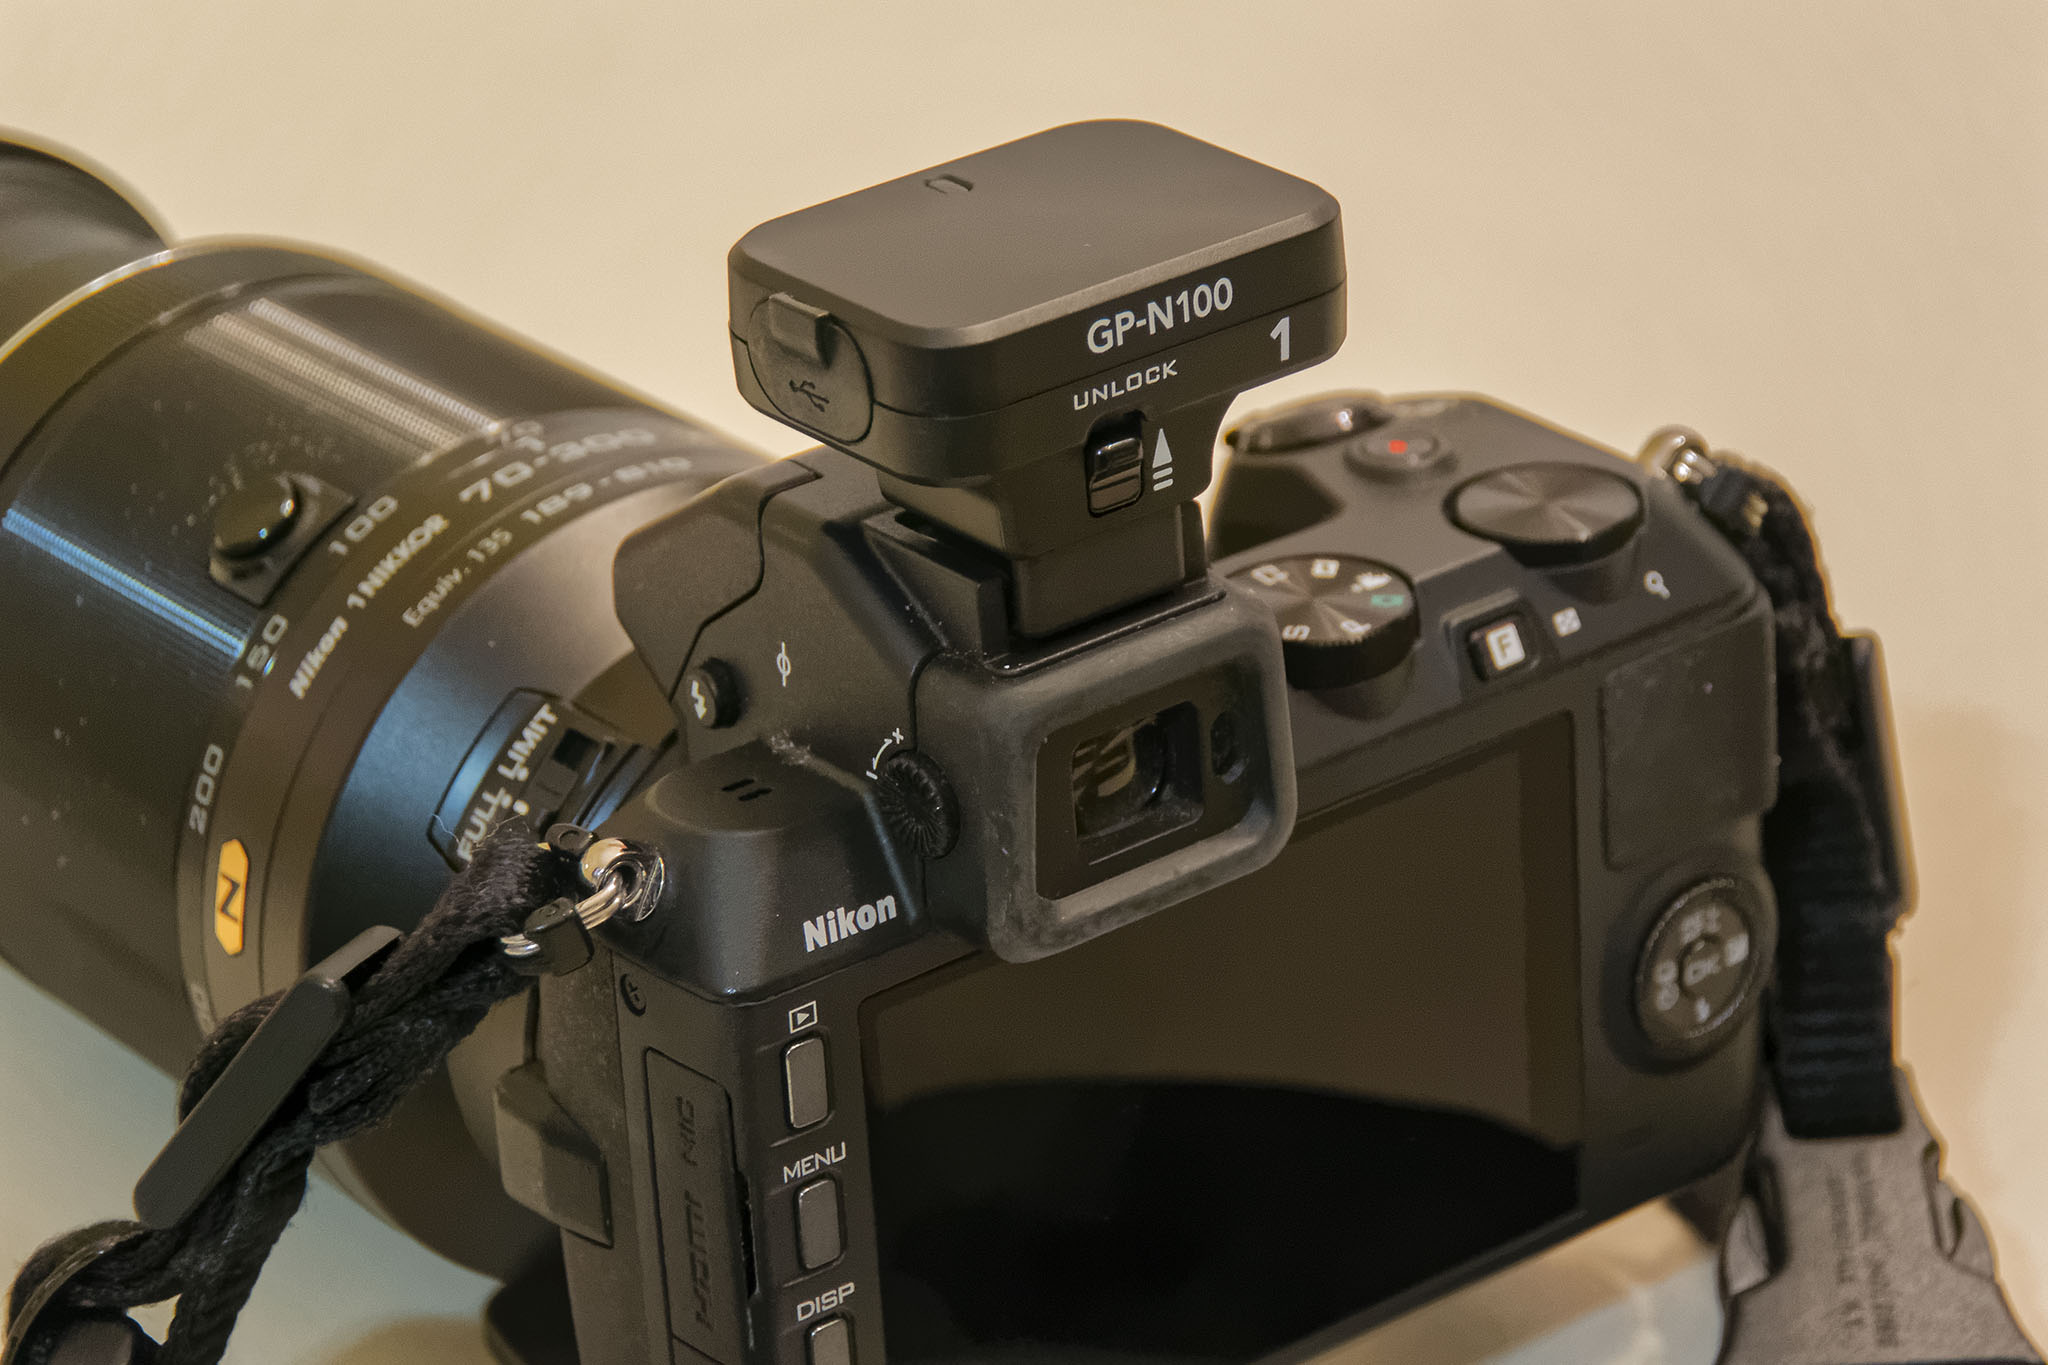 Nikon 1 GP-N100 GPS Review - Small Sensor Photography by Thomas Stirr